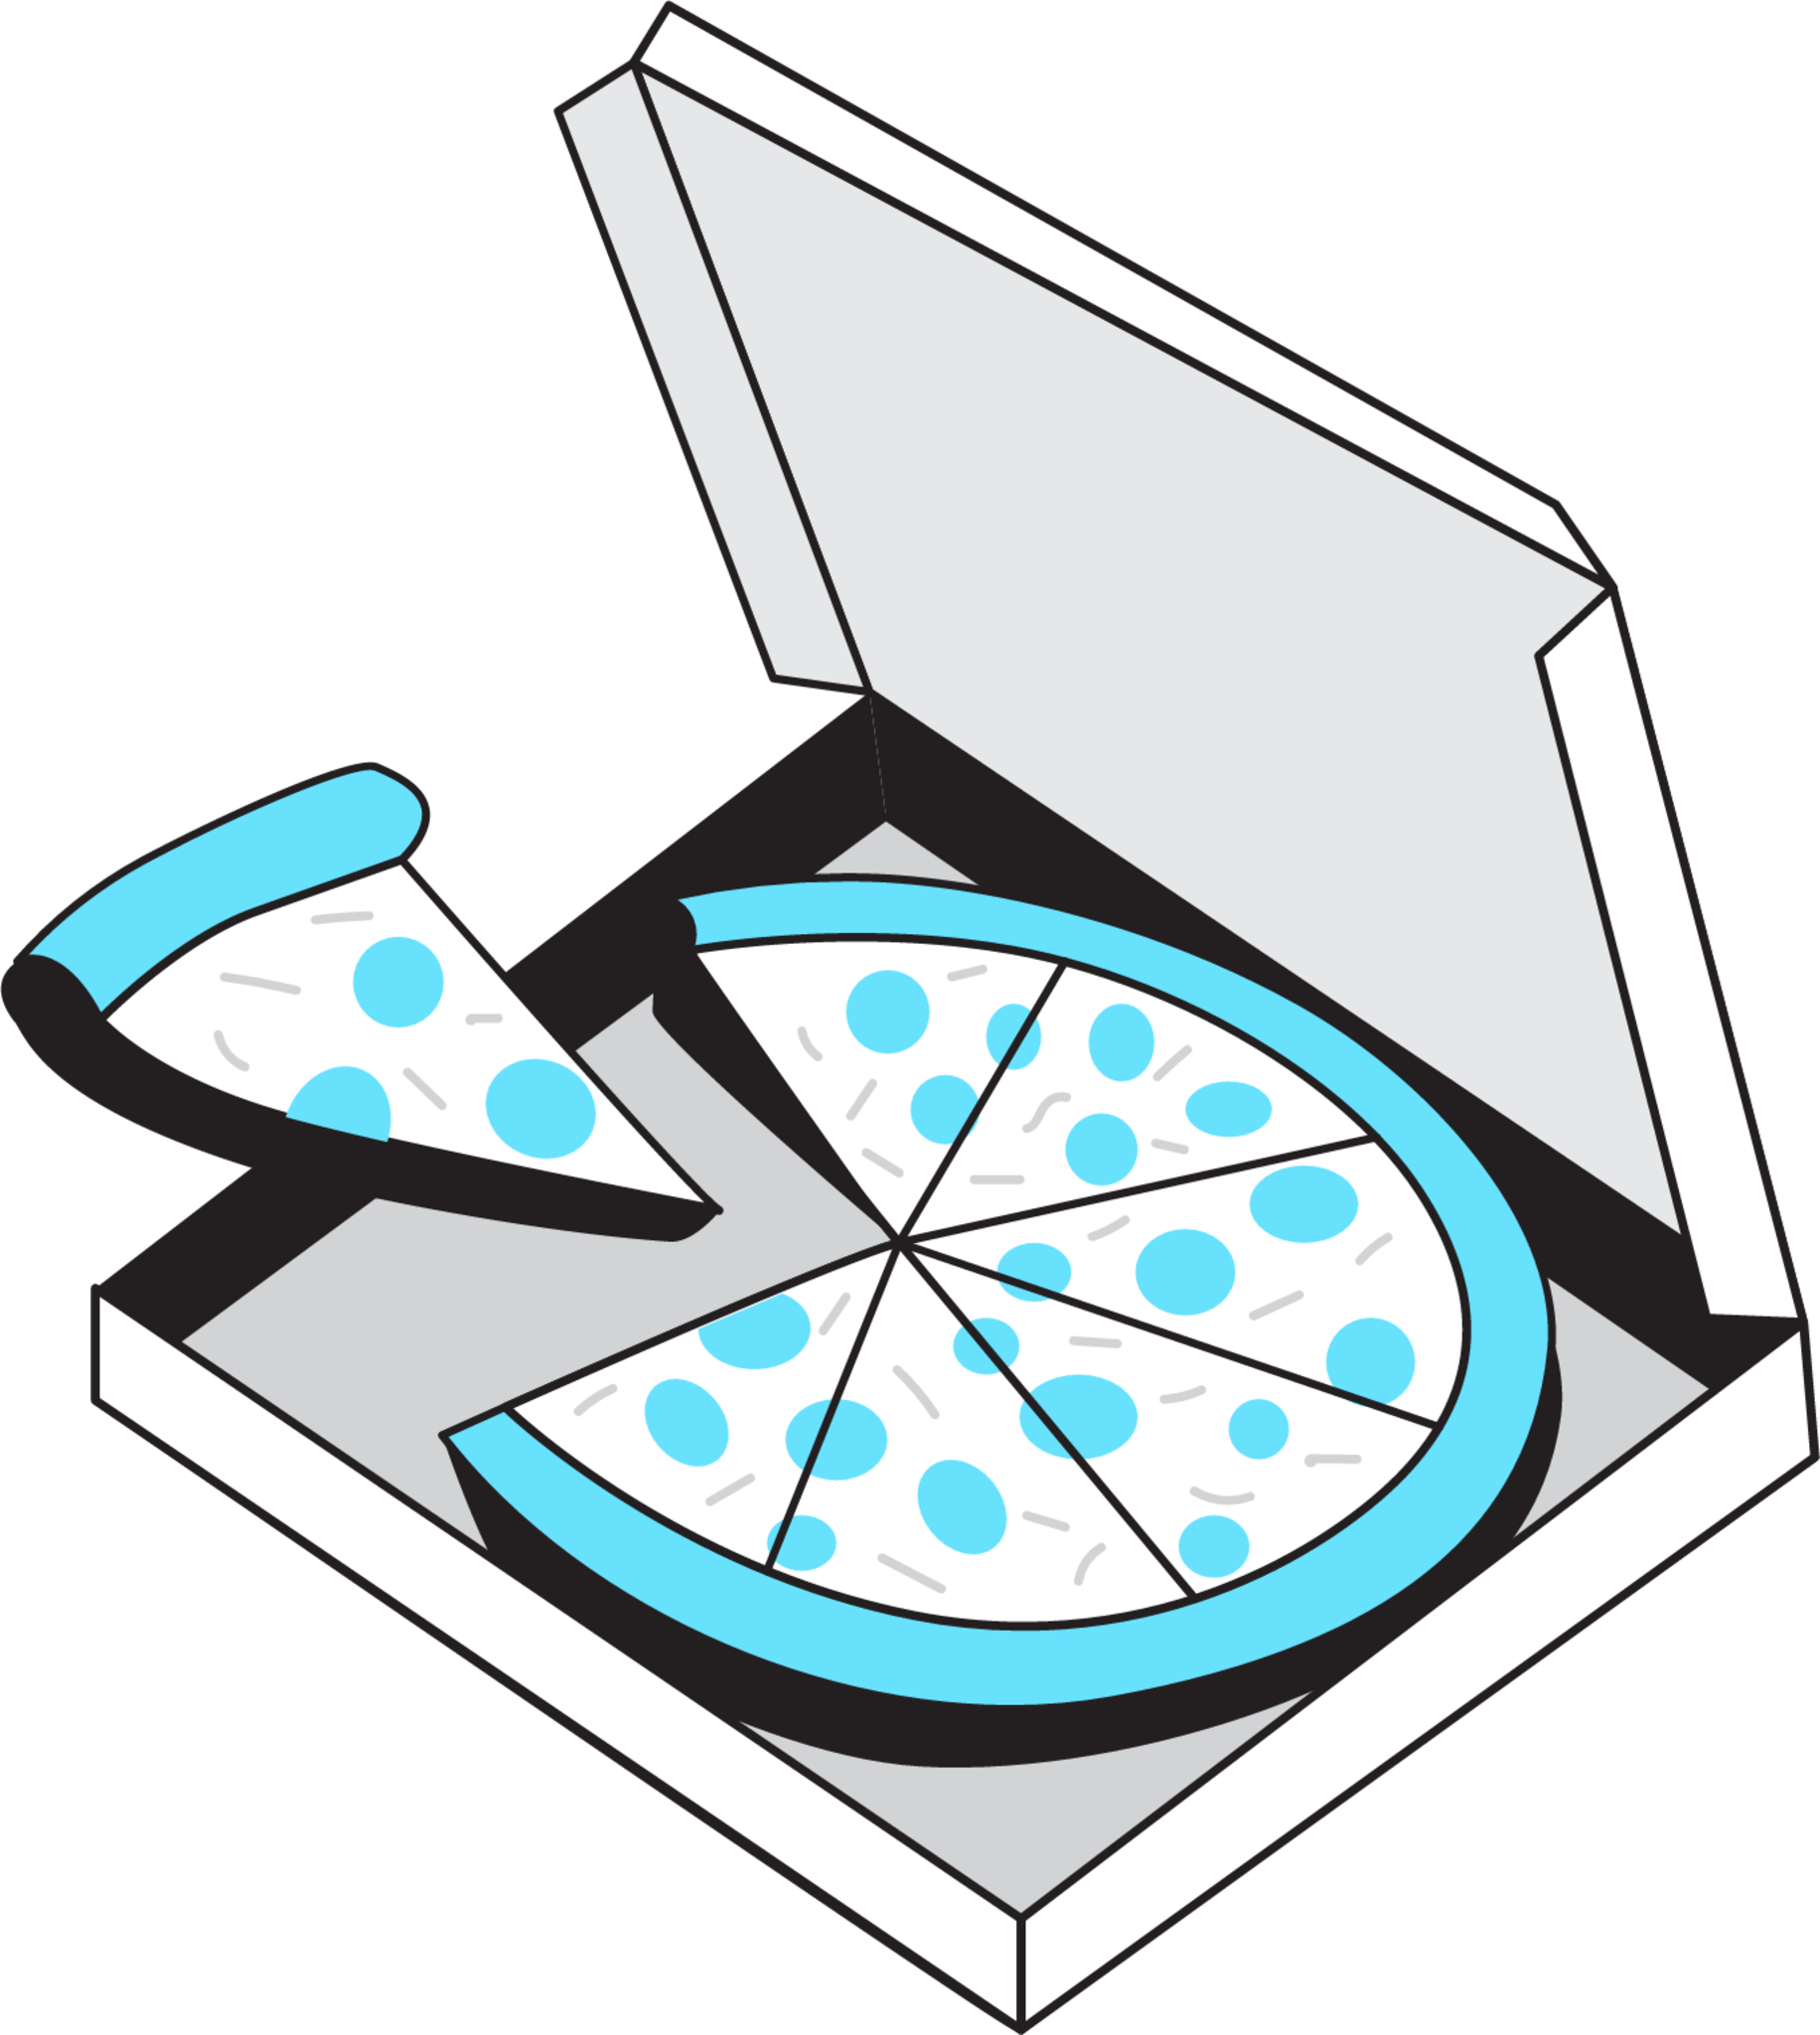 Pizza illustration